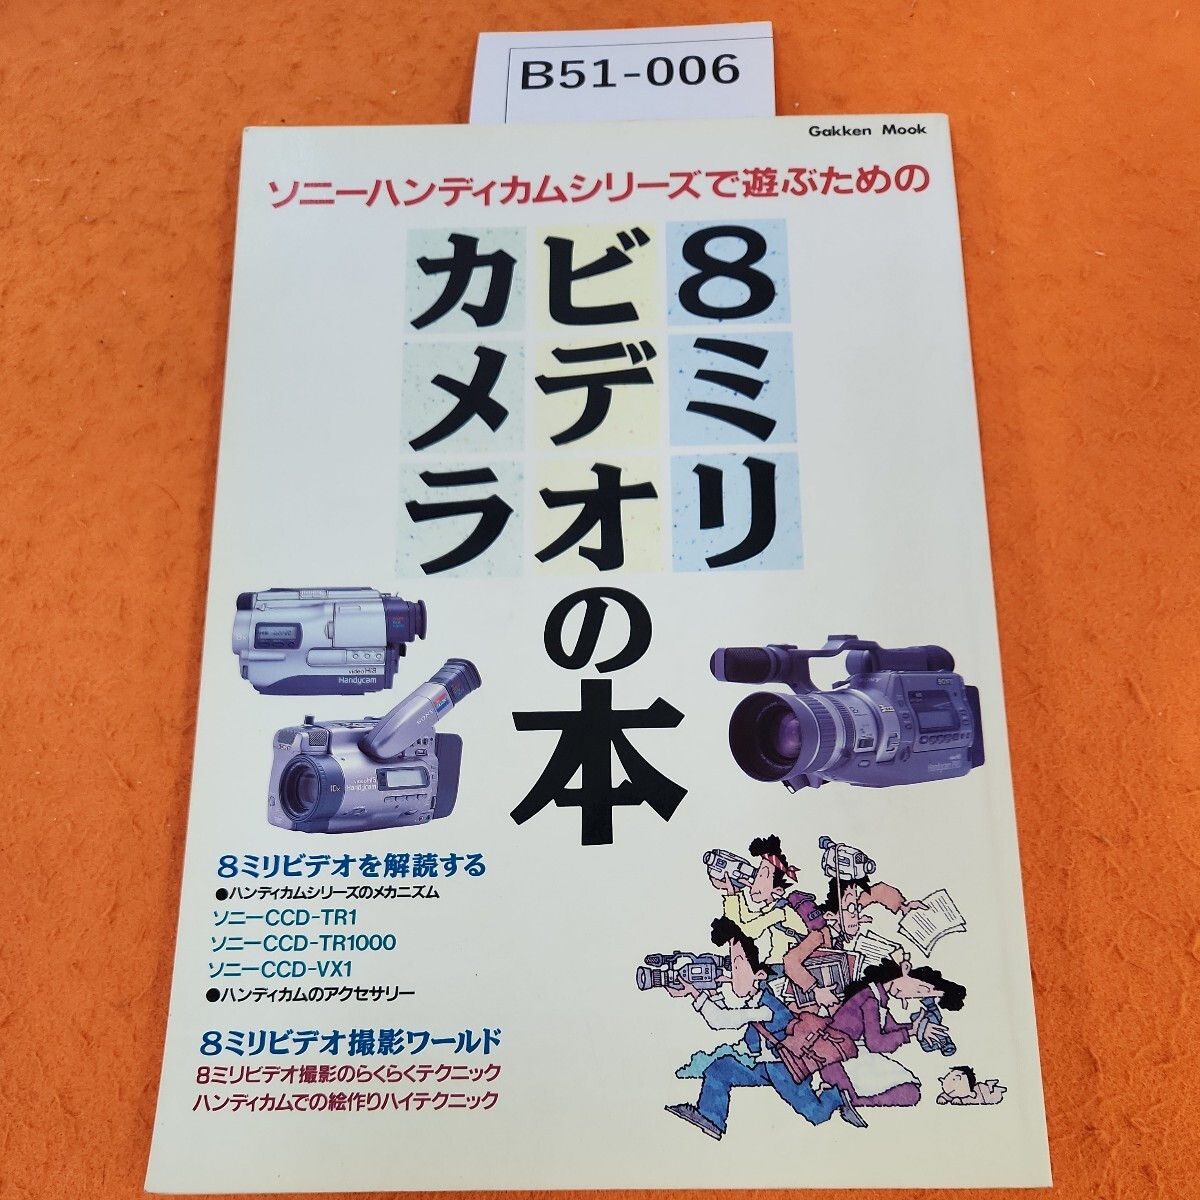 B51-006 Sony Handycam series play therefore. 8 millimeter video camera. book@Gakken